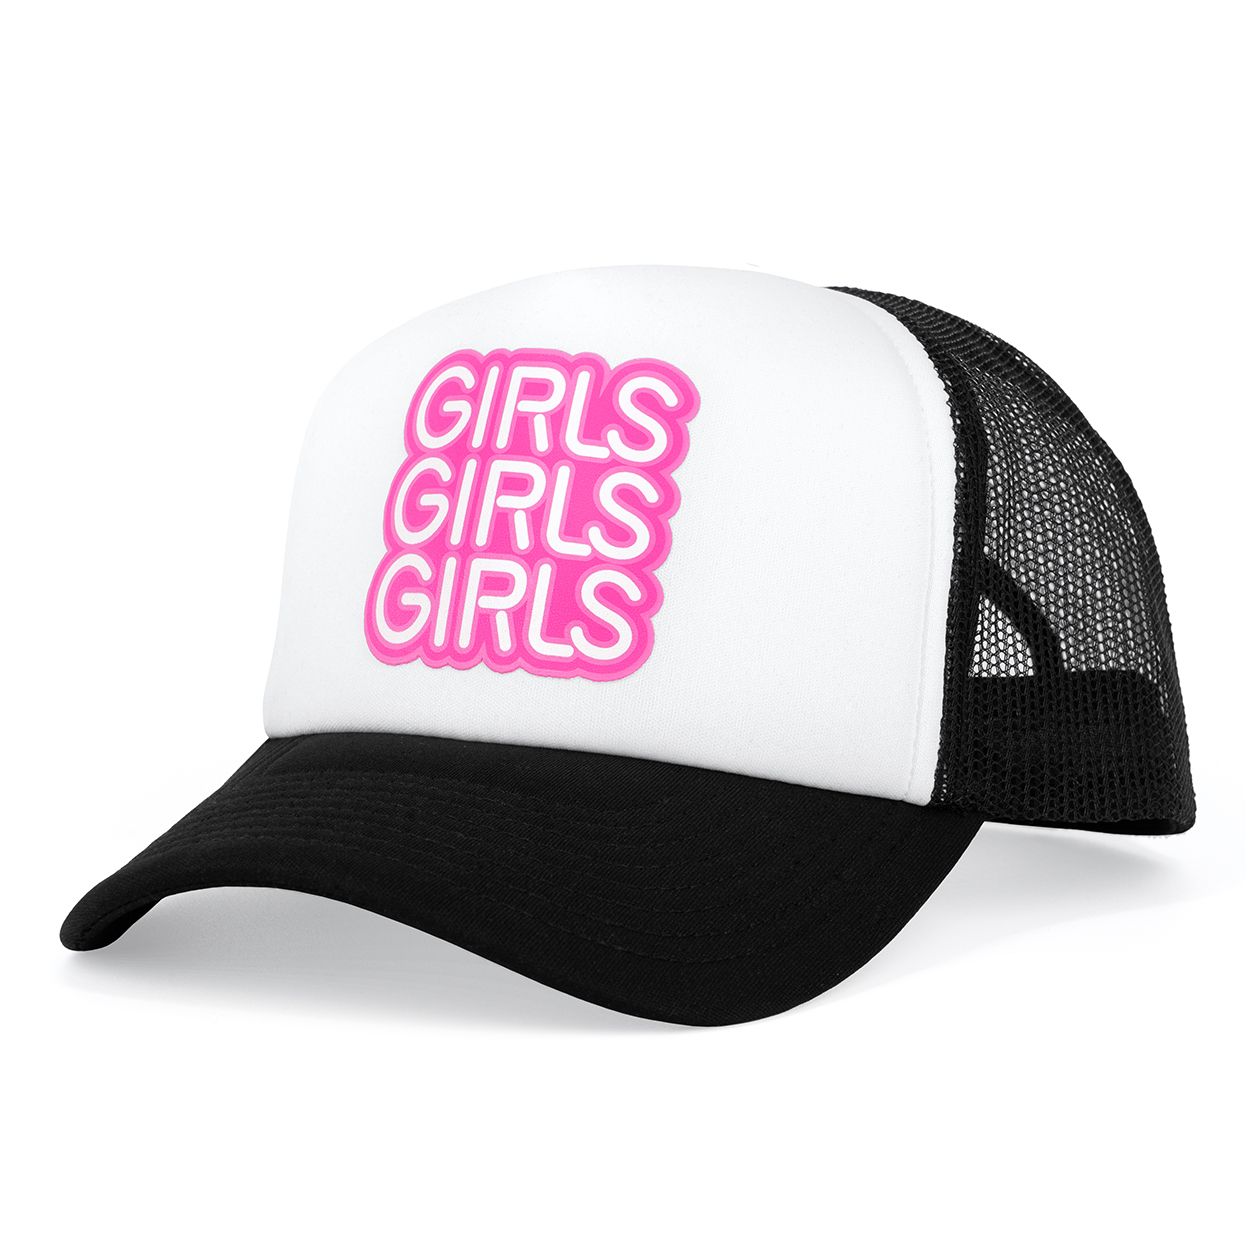 HAT GIRLS GIRLS GIRLS (NET) - Click Image to Close